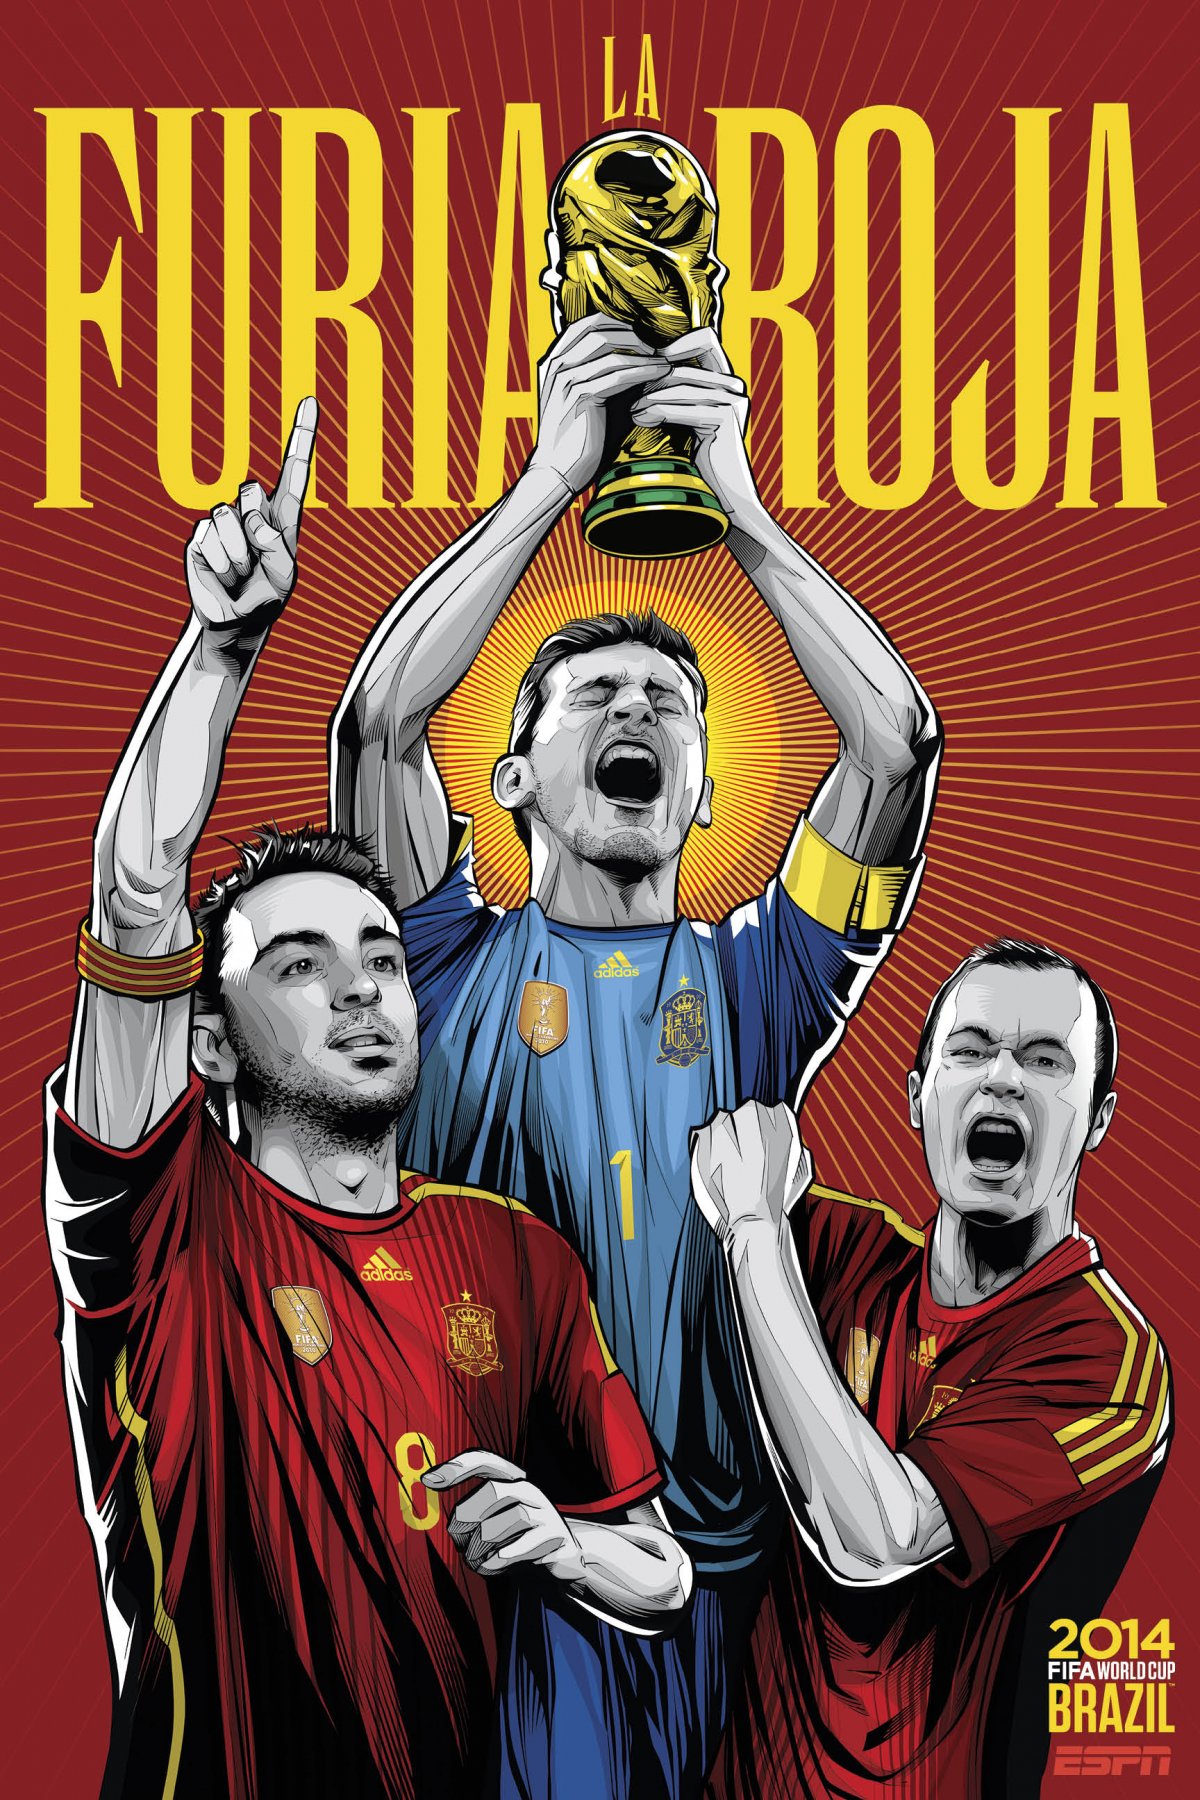 fifa world cup 2014